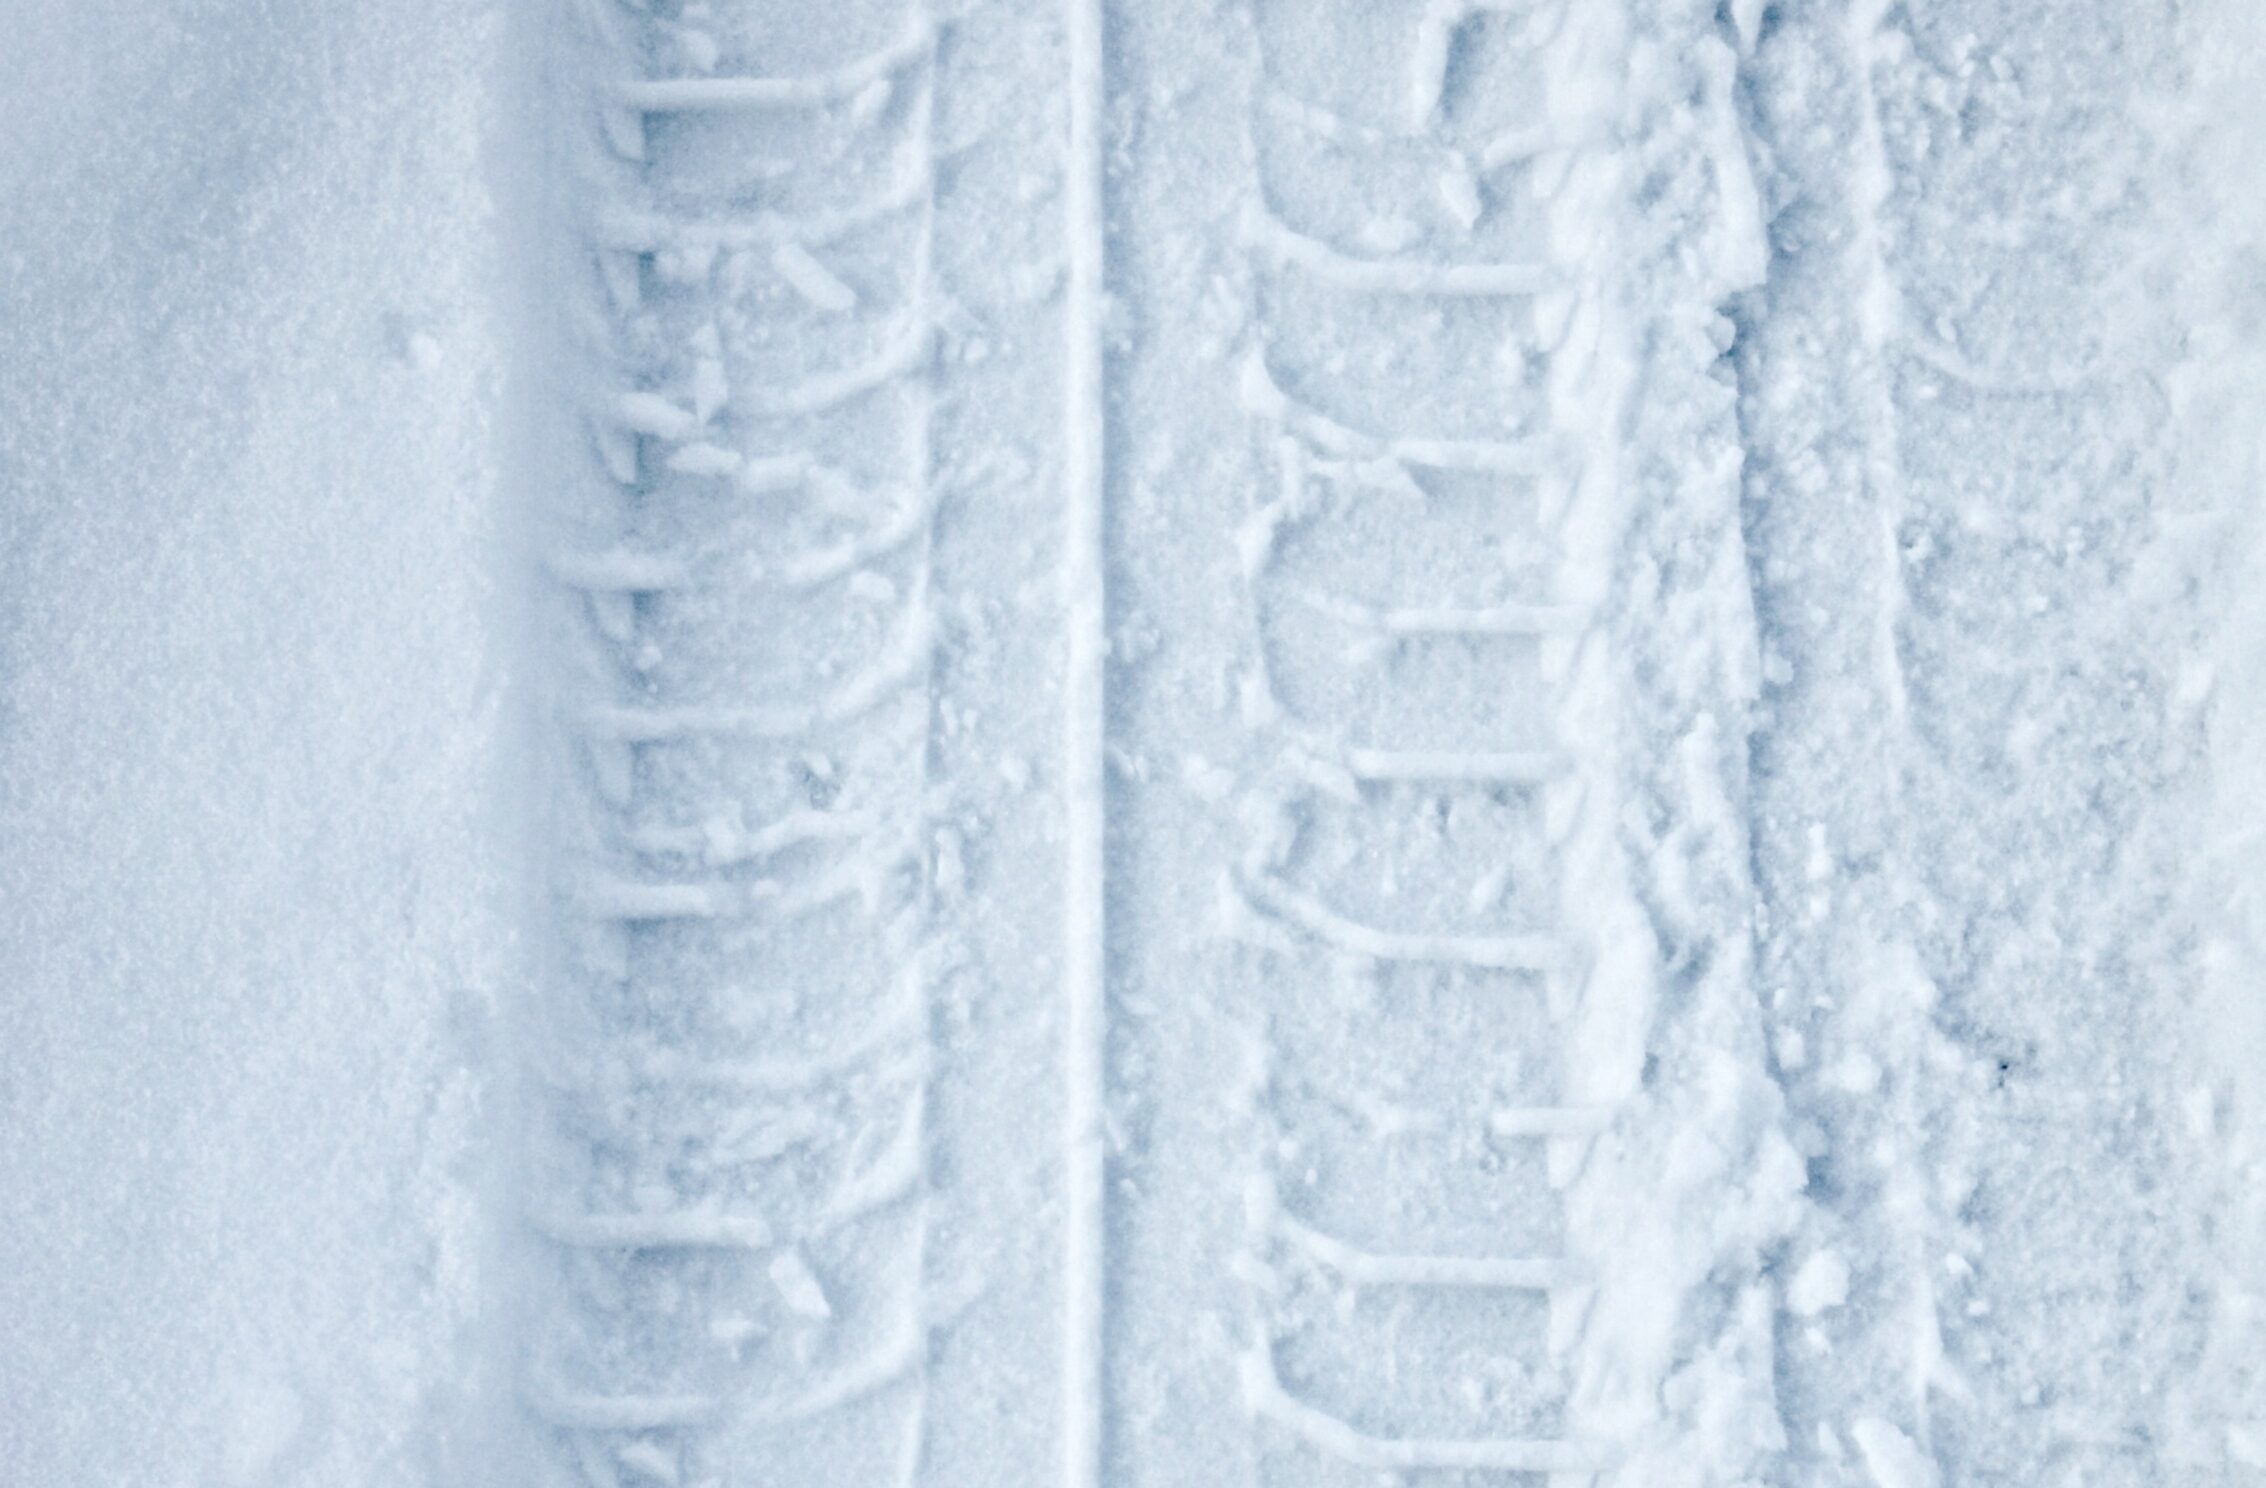 2266x1488 wallpaper Tyre Track Snow Winter iPad Wallpaper 2266x1488 pixels resolution